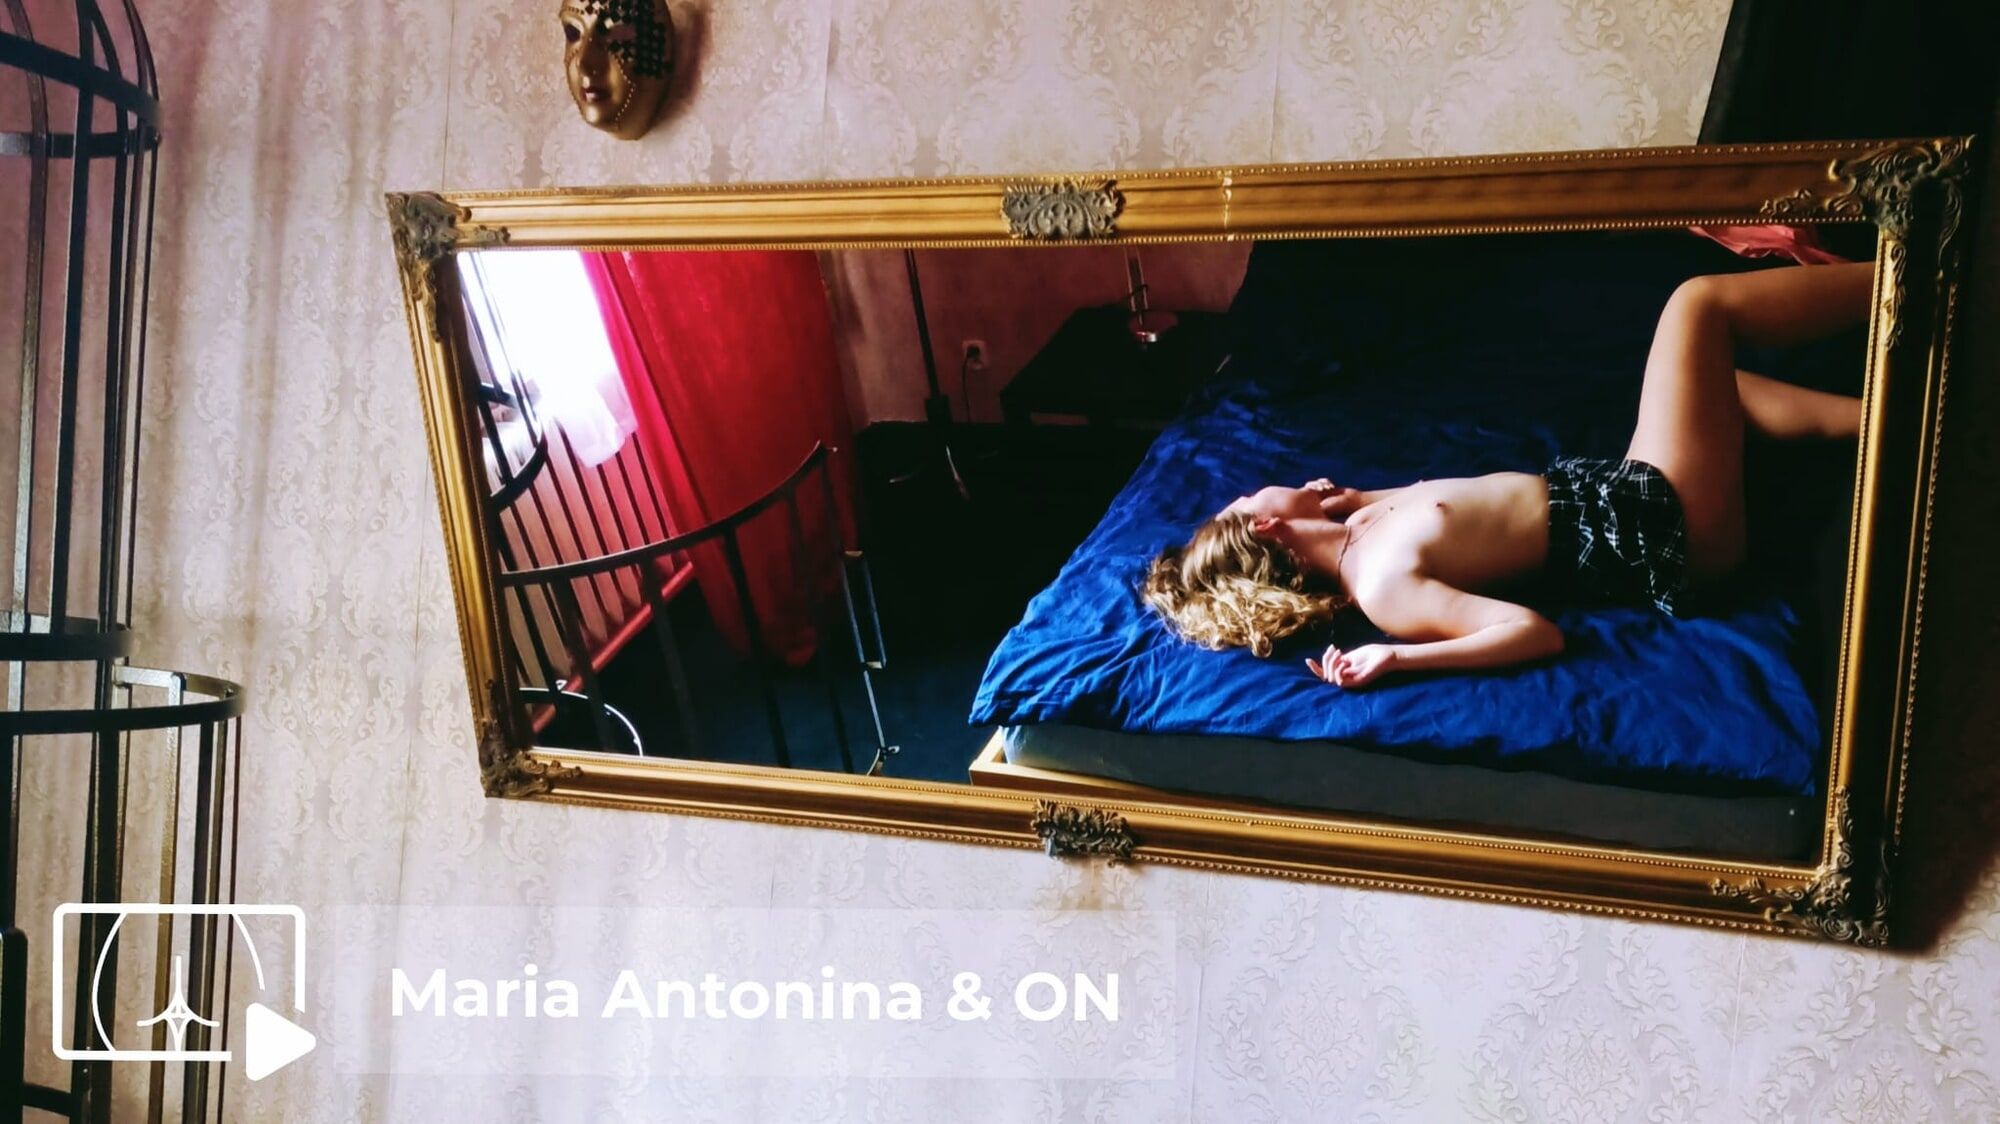 MariaAntonina&ON (hotel)